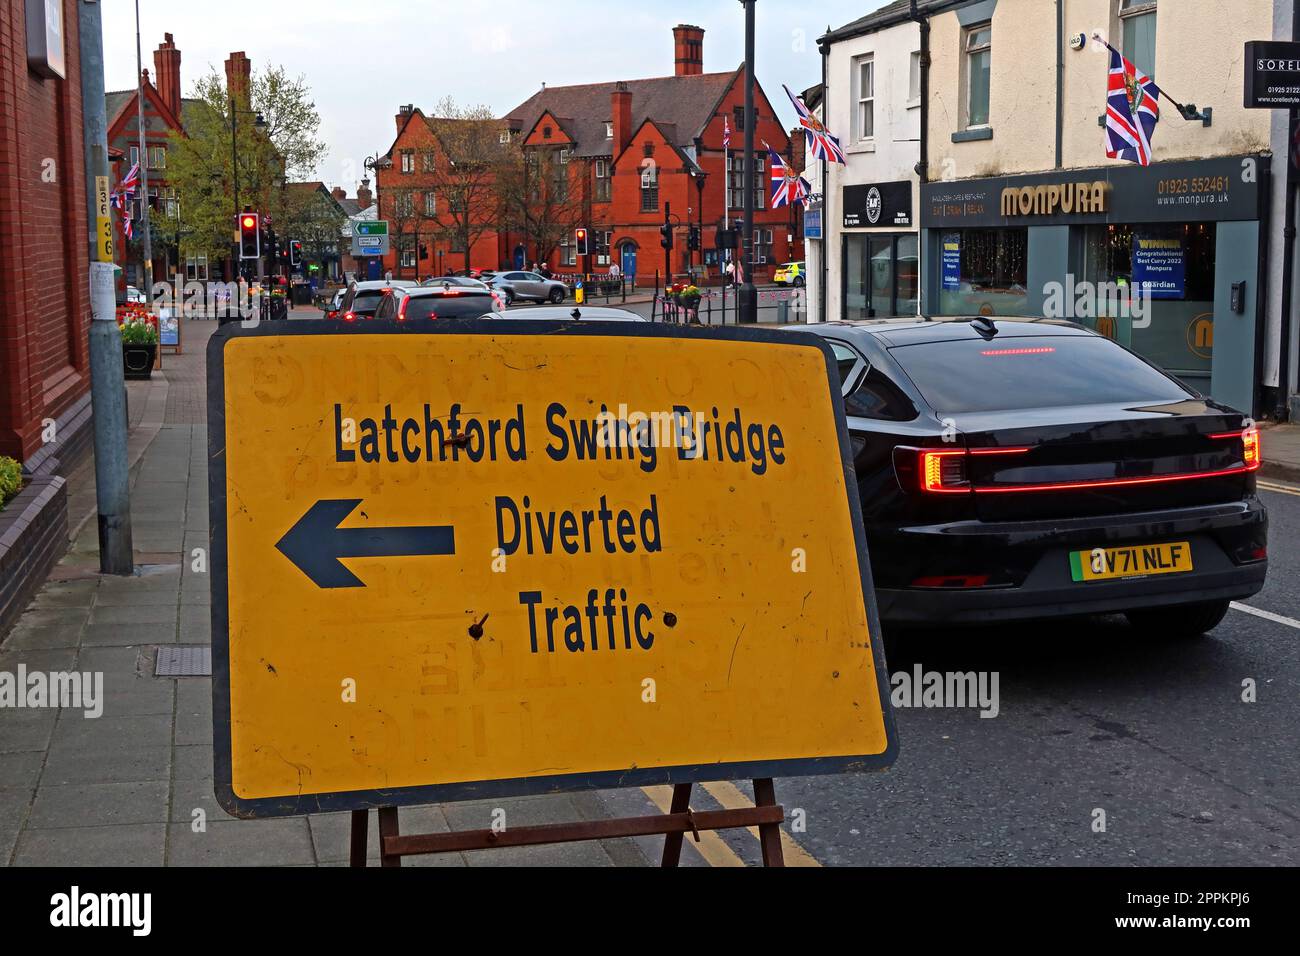 Latchford Swing Bridge geschlossen - umgeleitetes Verkehrsschild, A50, Verkehrschaos und Verspätungen, Stockton Heath, Warrington, Cheshire, England, UK, WA4 6SG Stockfoto